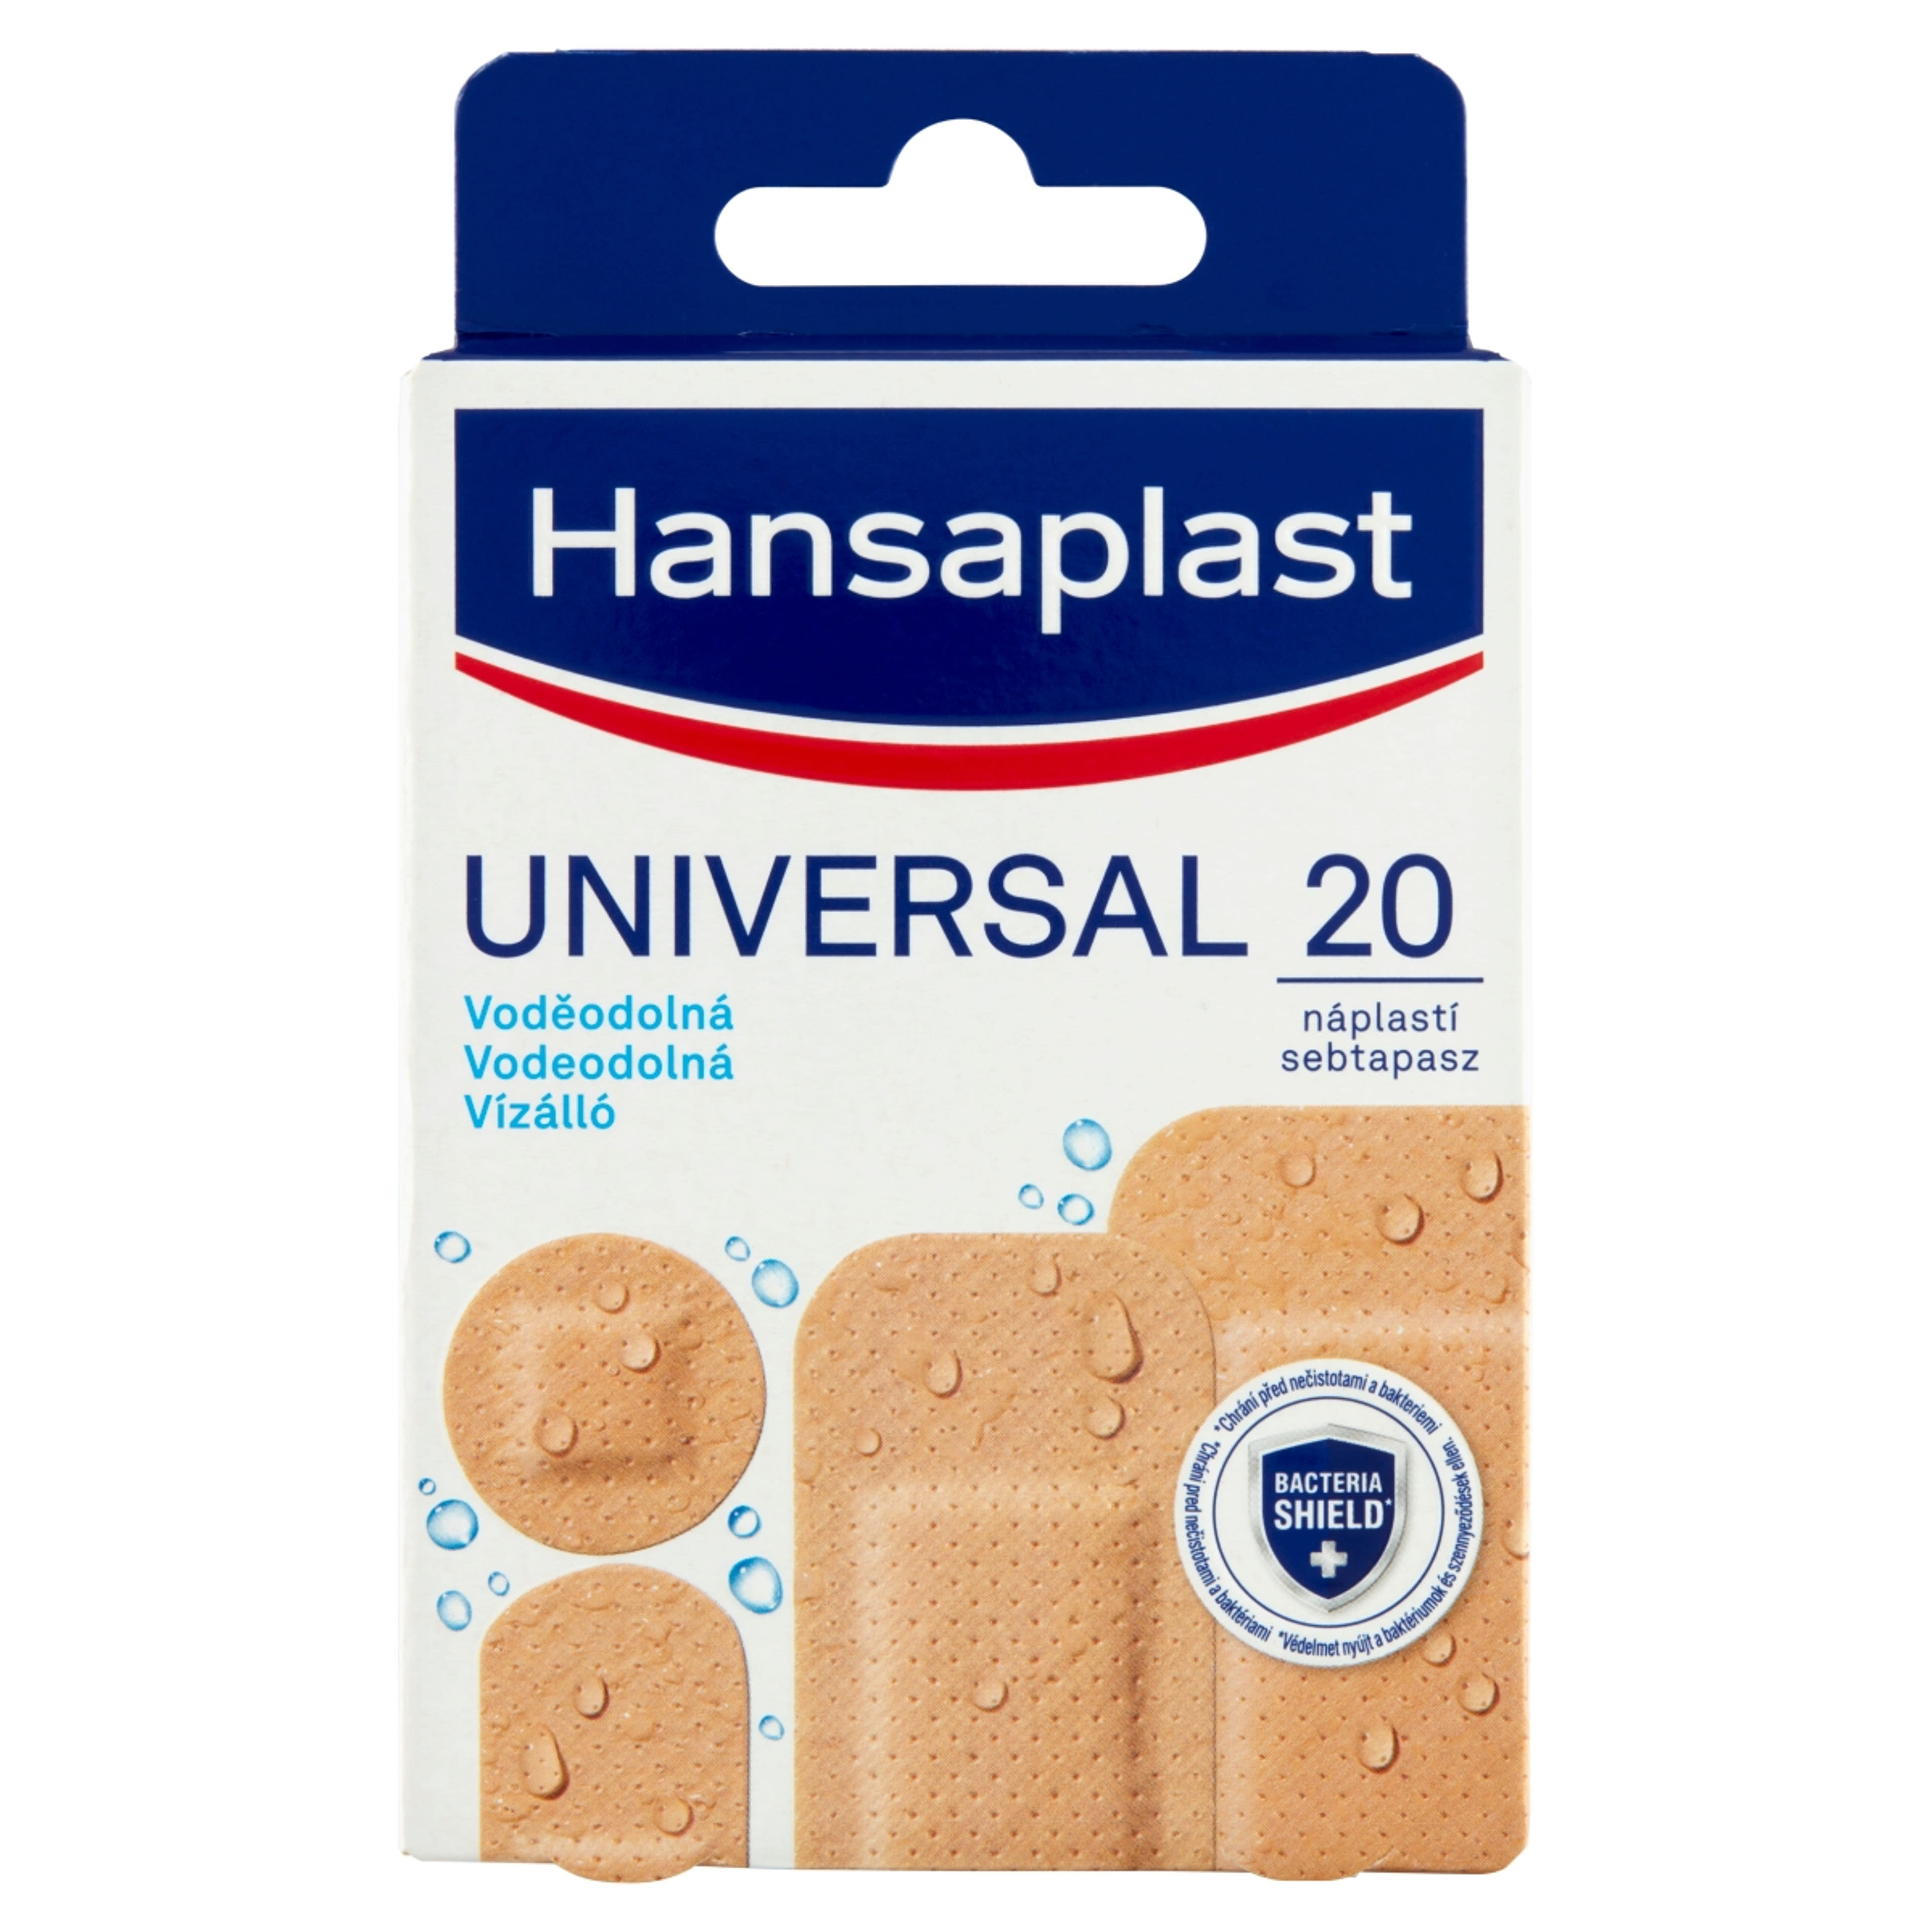 Hansaplast Universal sebtapasz - 20 db